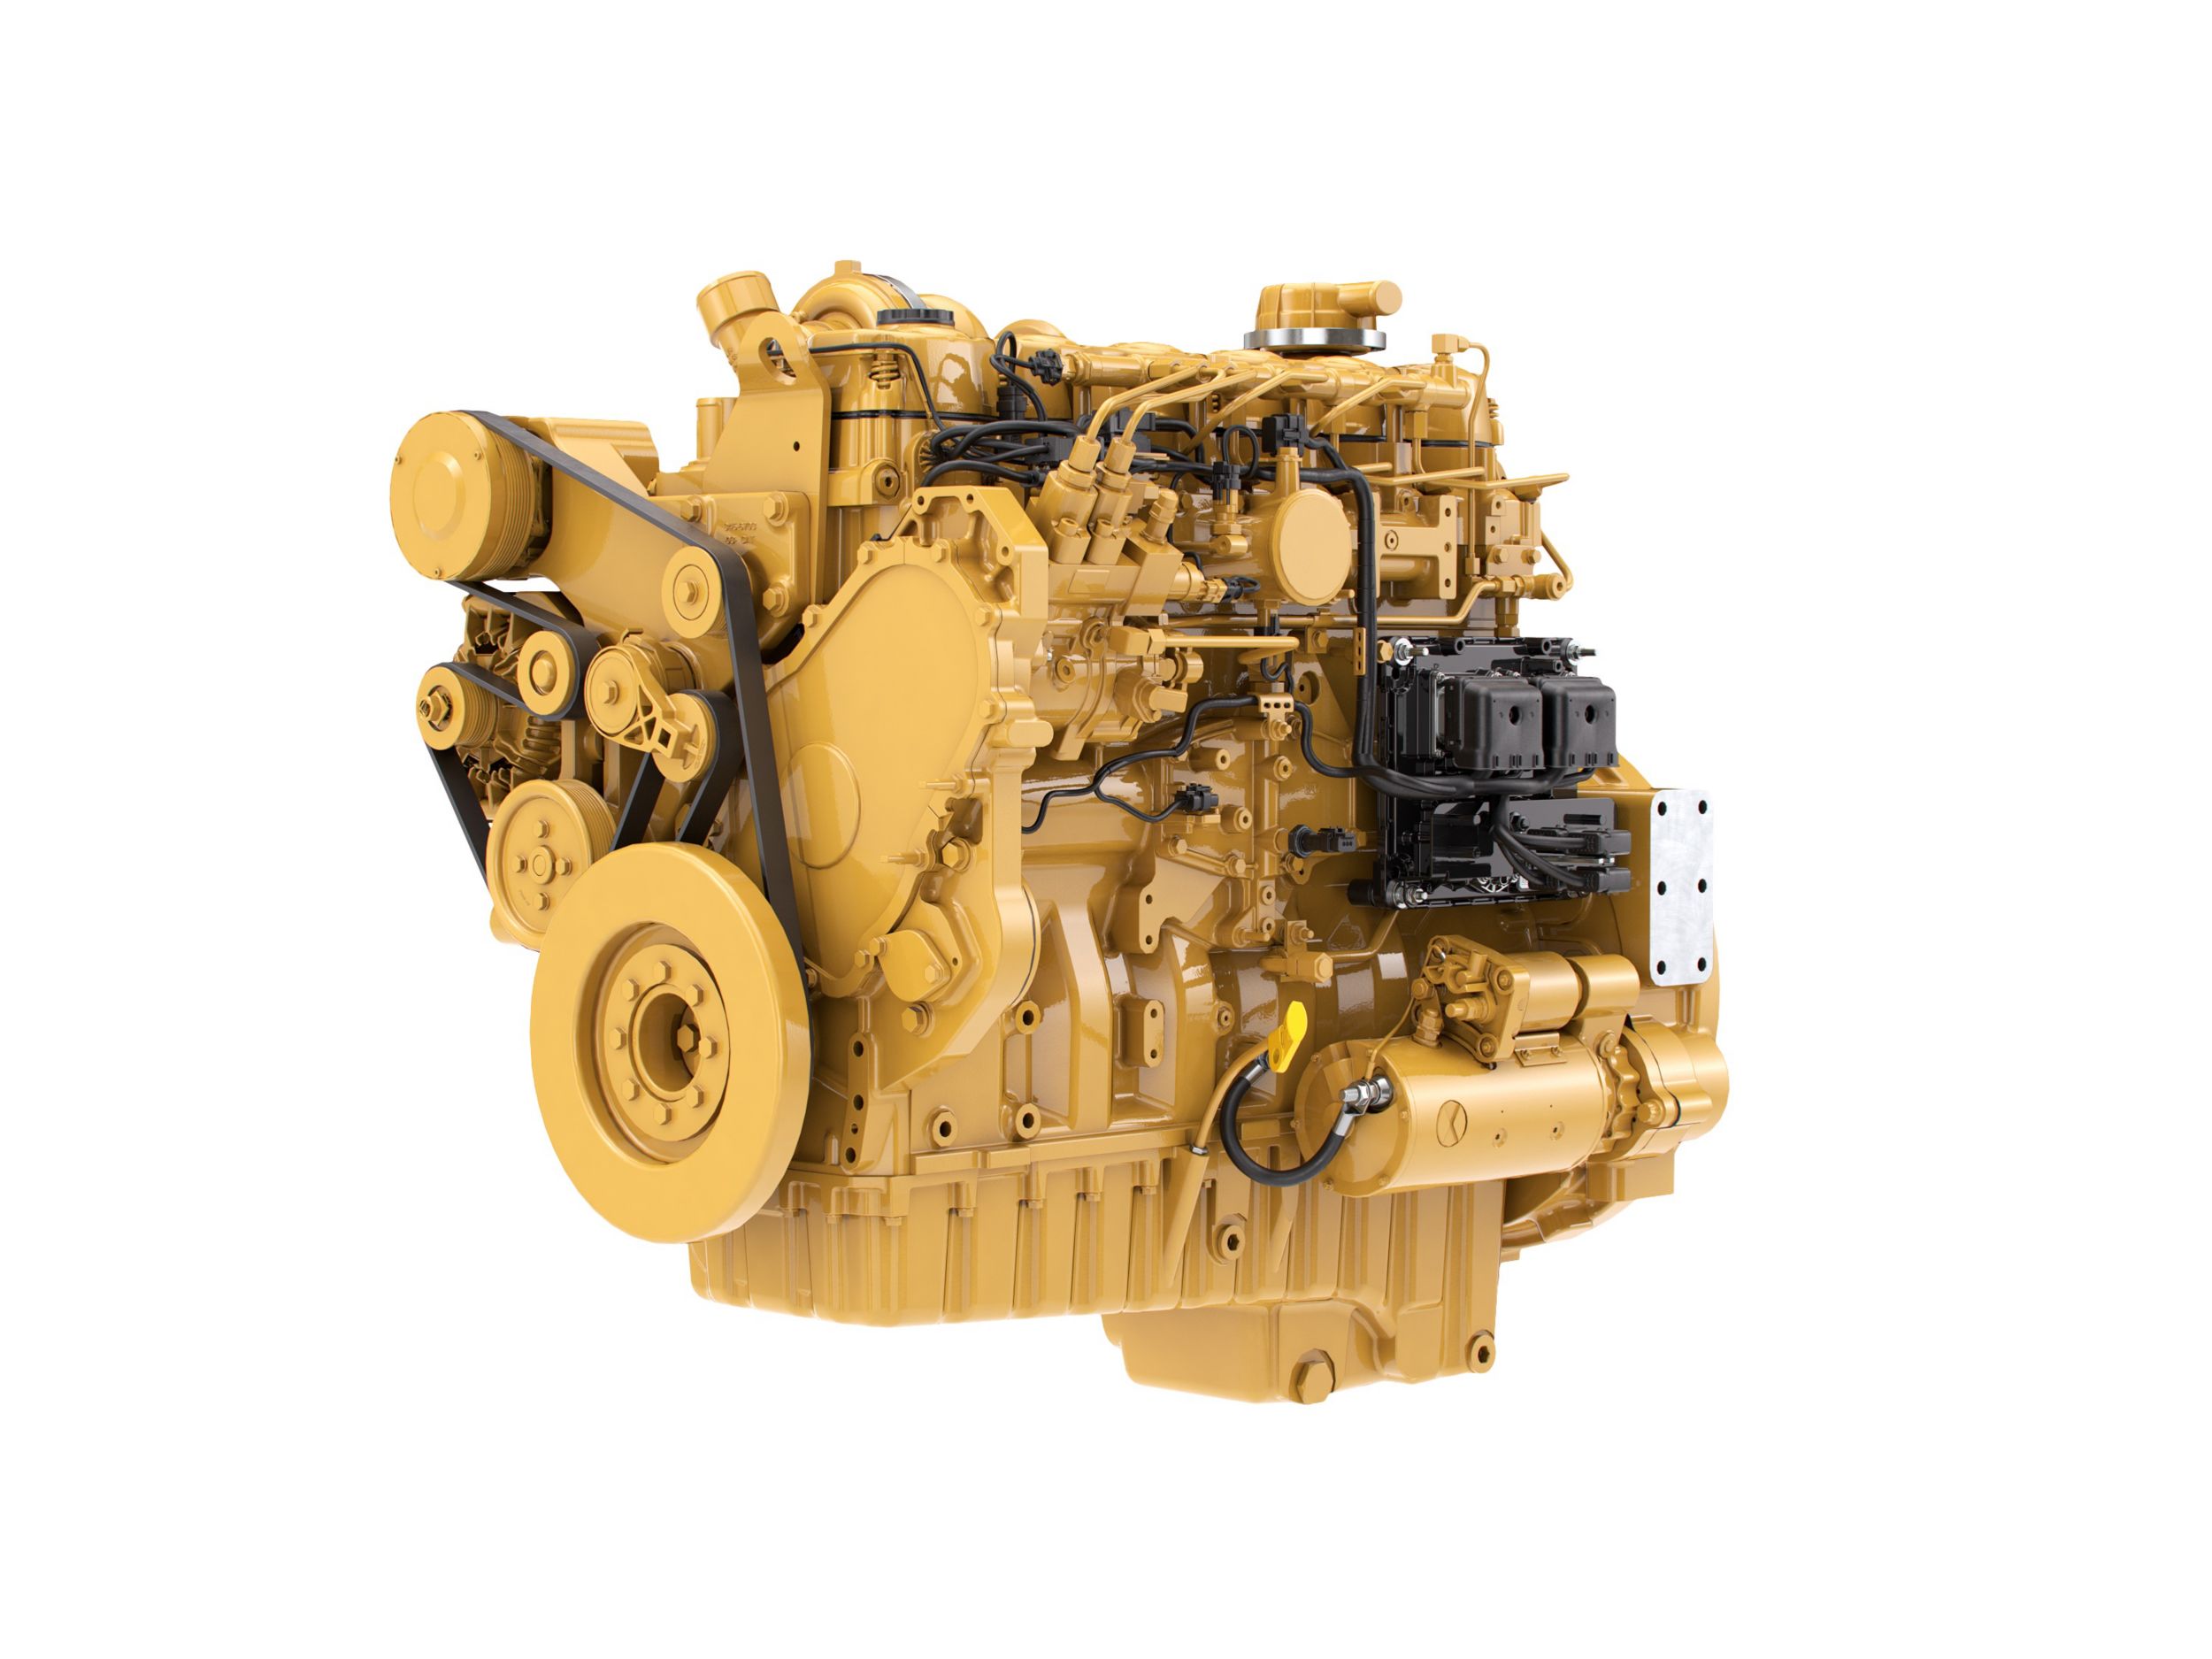 C9.3 ACERT Tier 4 Diesel Engines - Highly Regulated